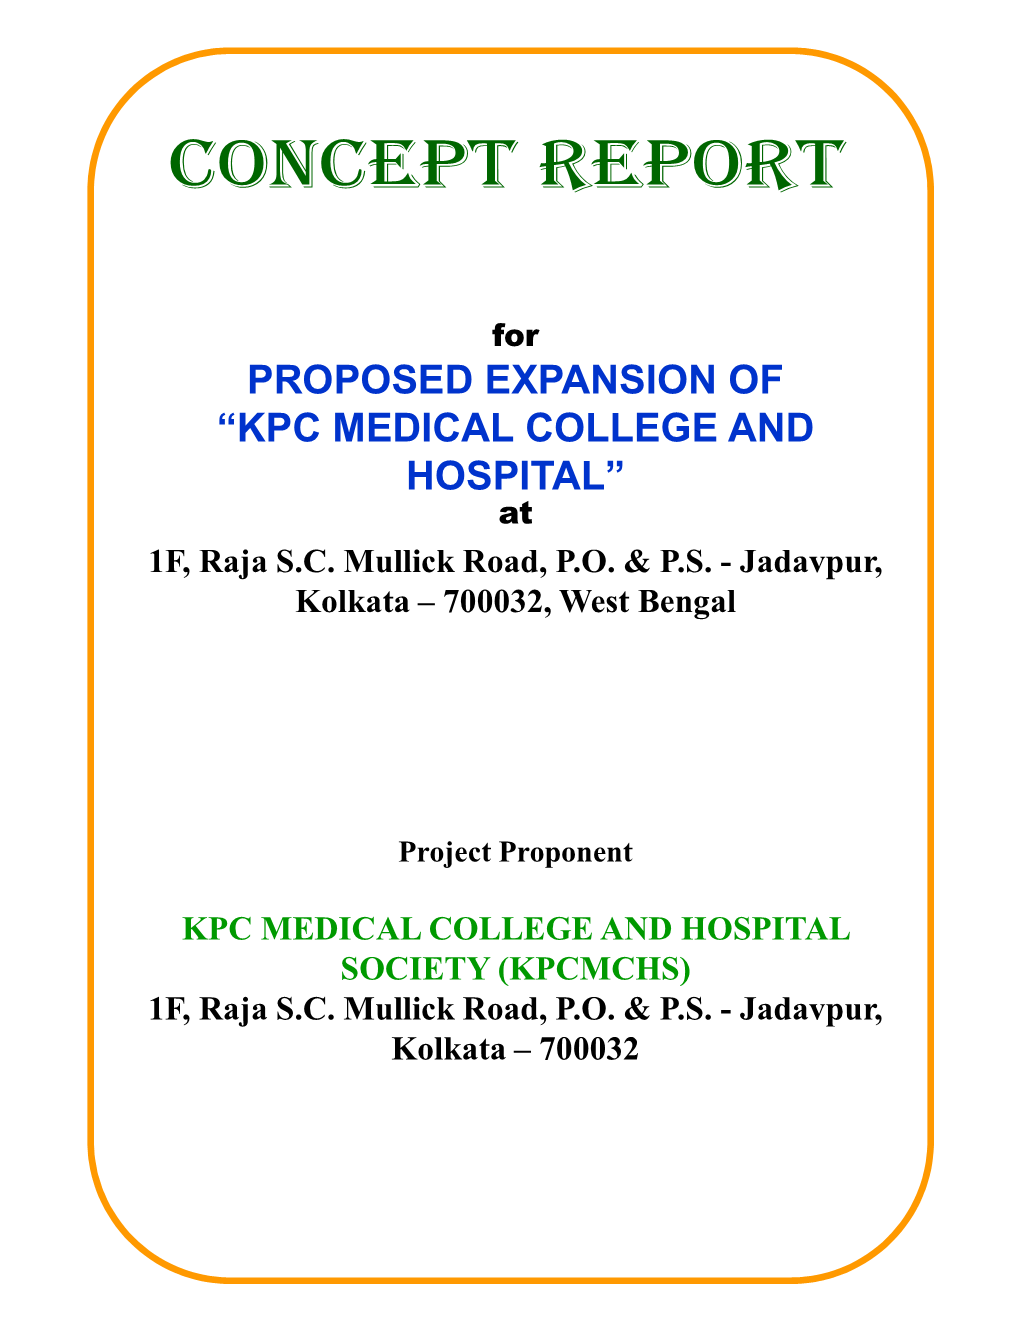 KPC MEDICAL COLLEGE and HOSPITAL” at 1F, Raja S.C